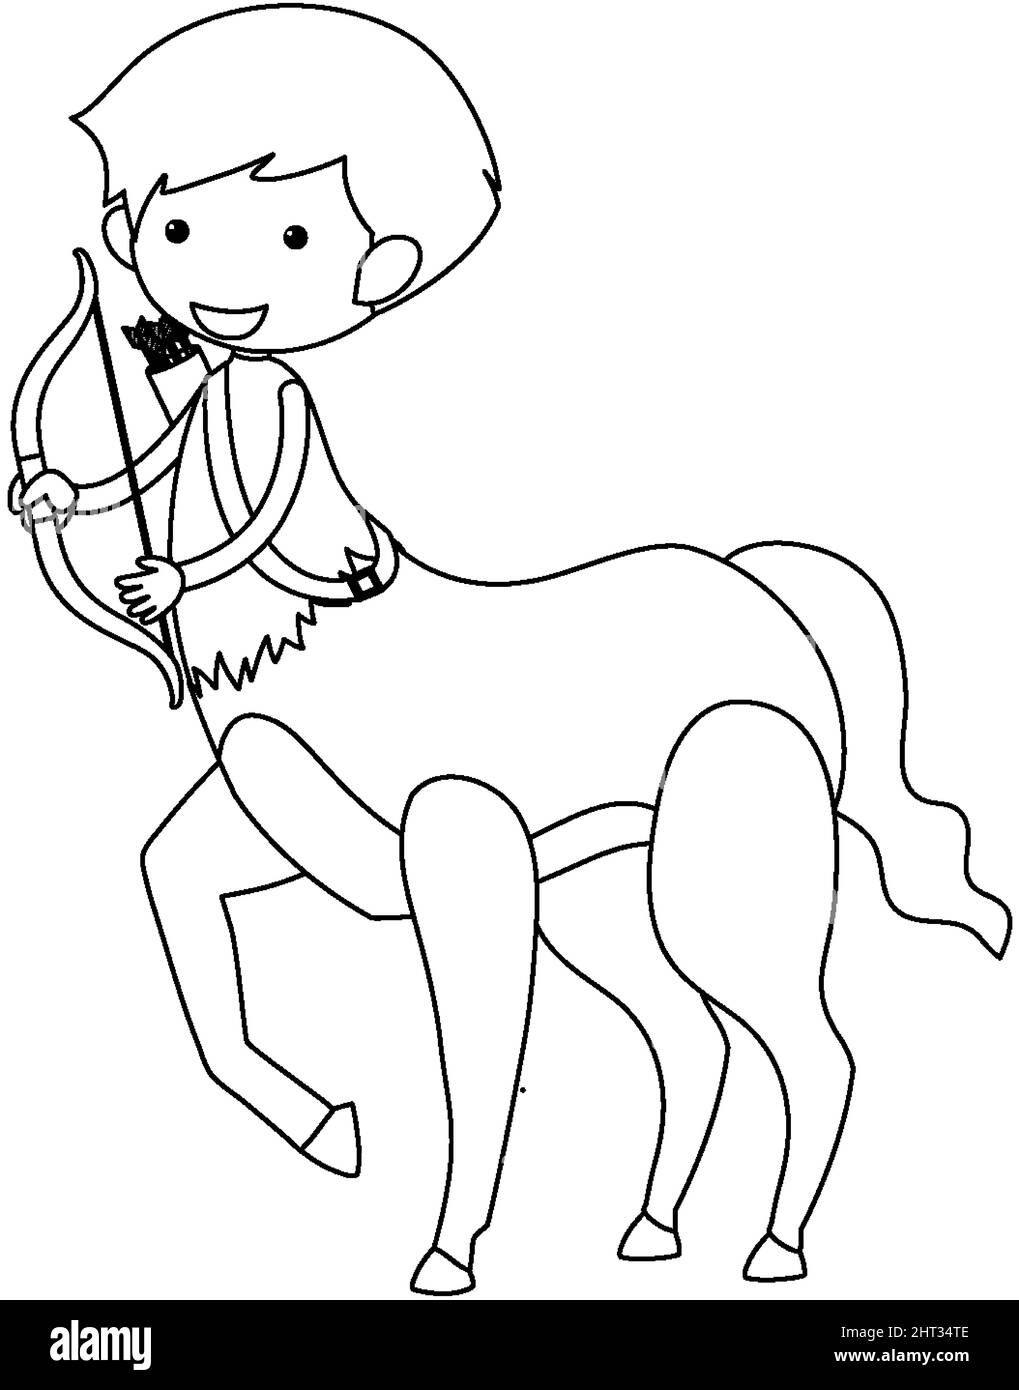 A centaur doodle outline for colouring illustration Stock Vector